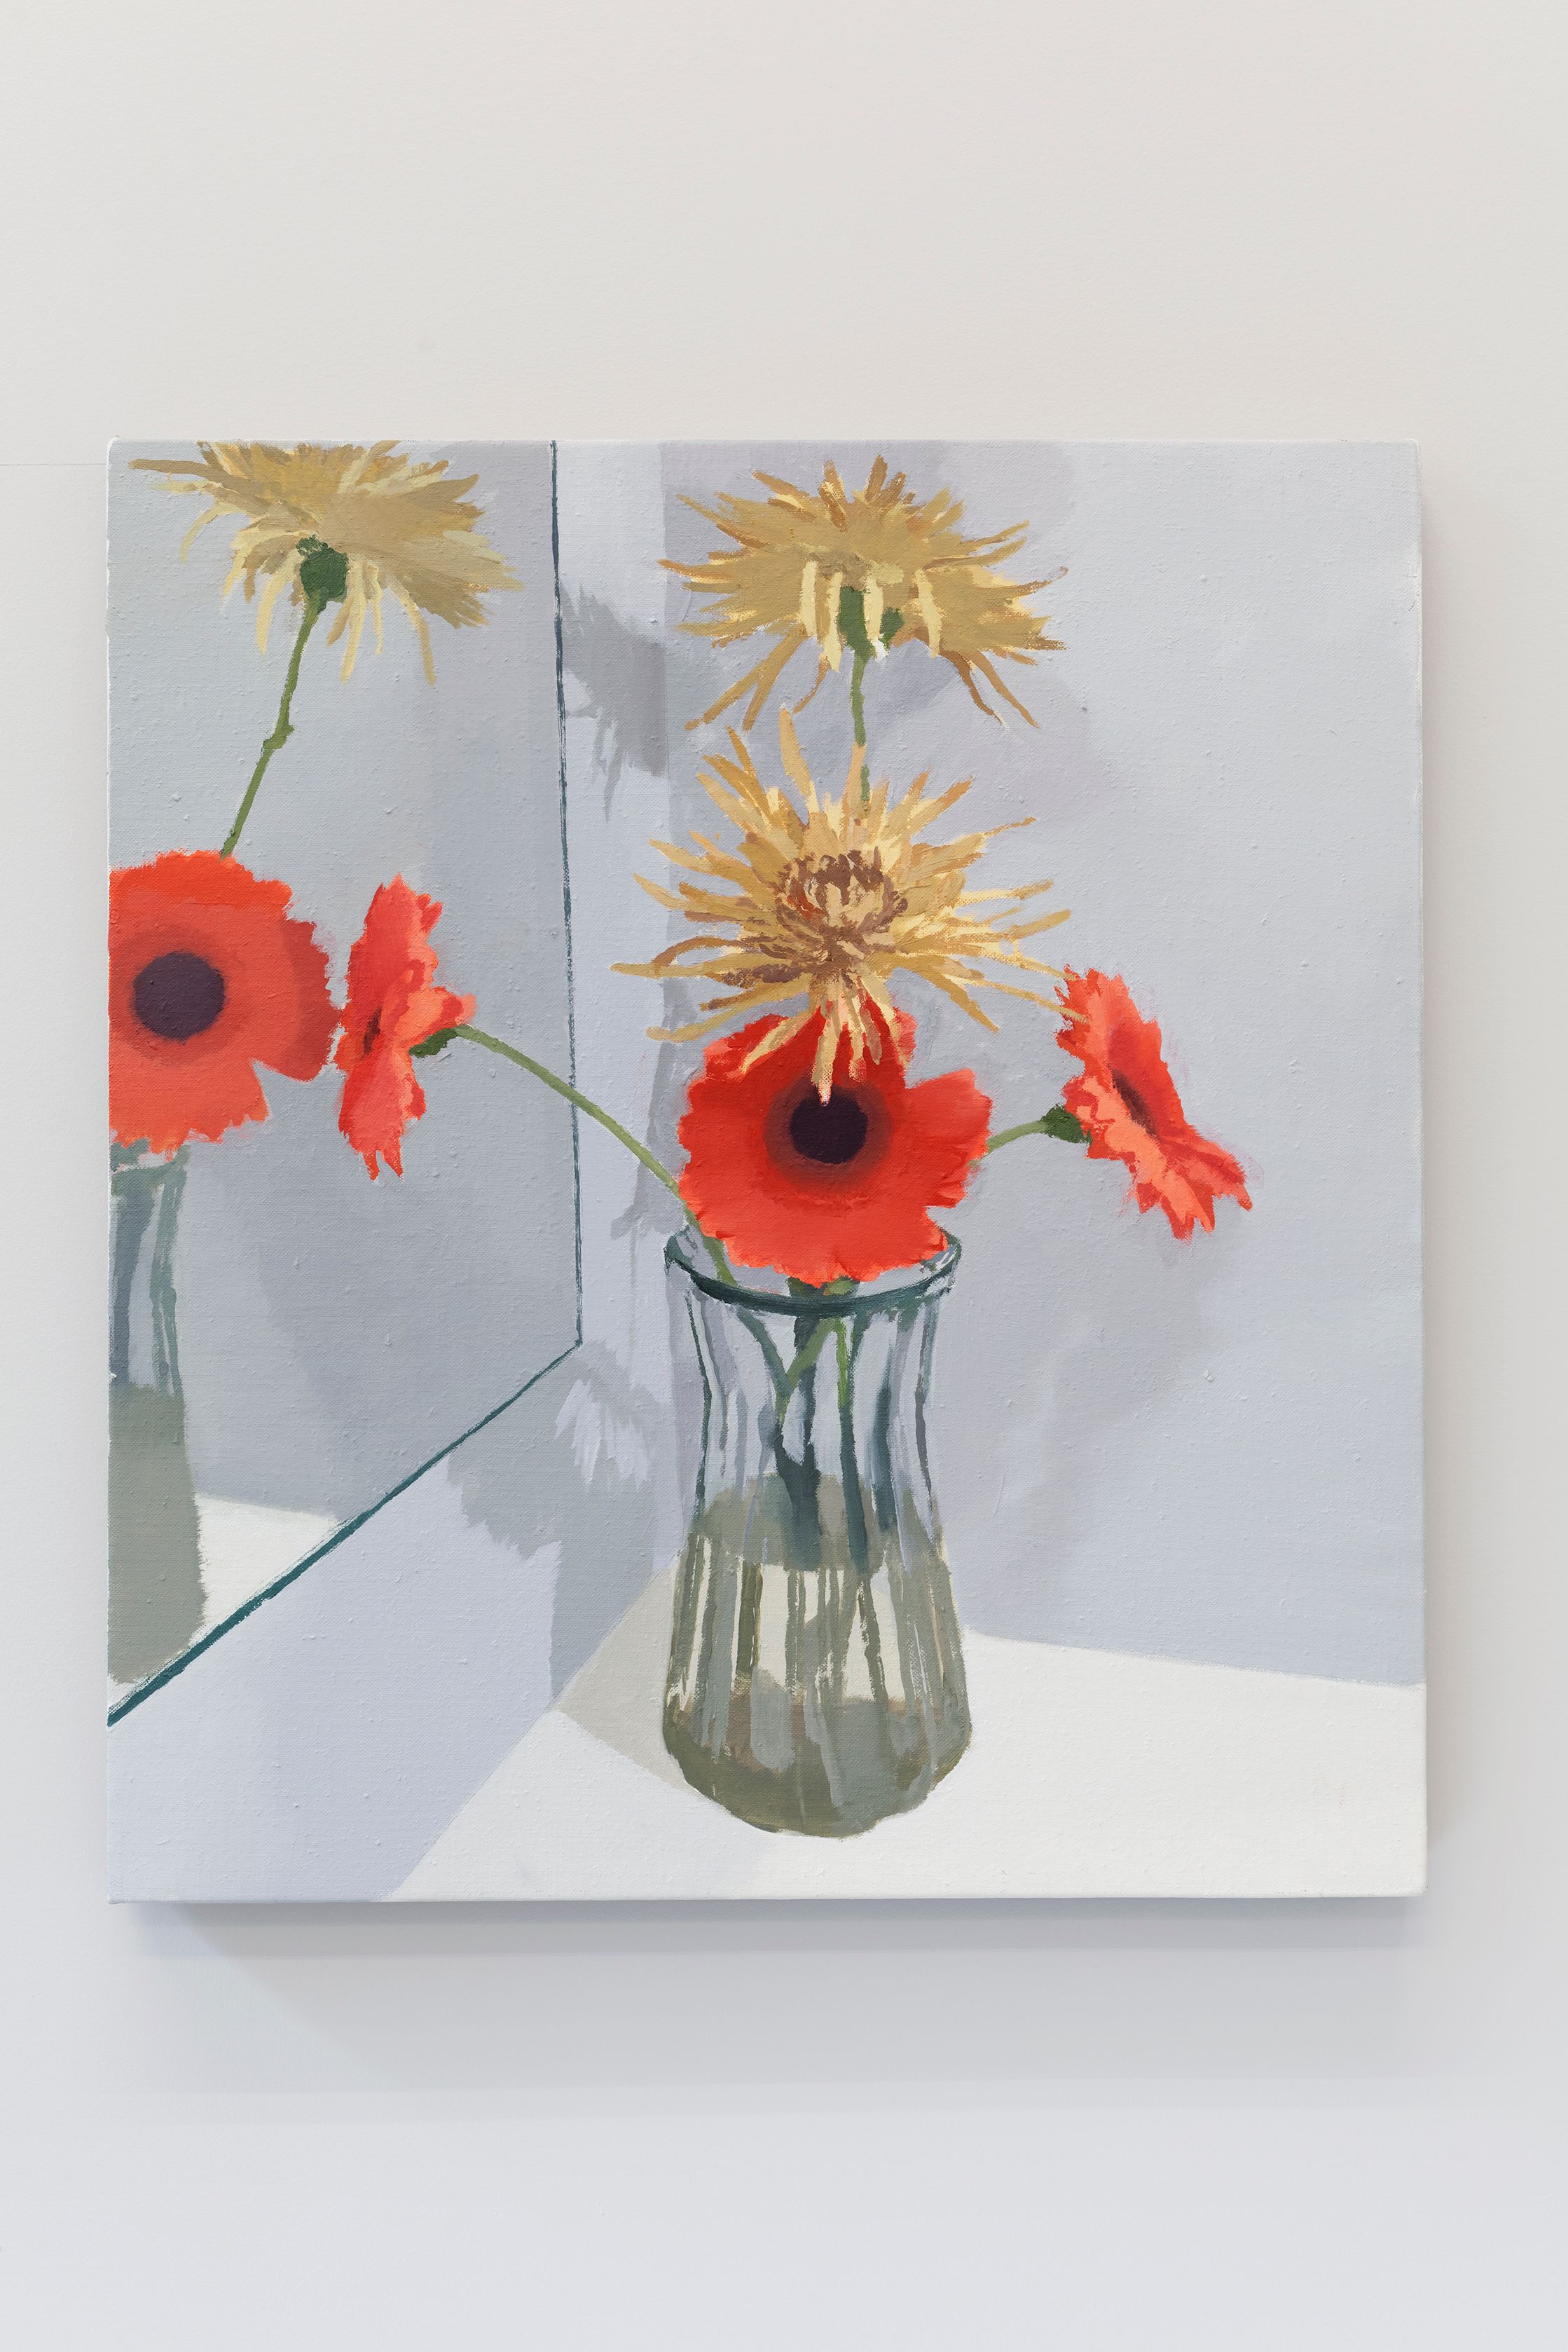 Roger White, "Chrysanthemums and gerbera daisies and a mirror", 2023. Vista de instalación en Labor.